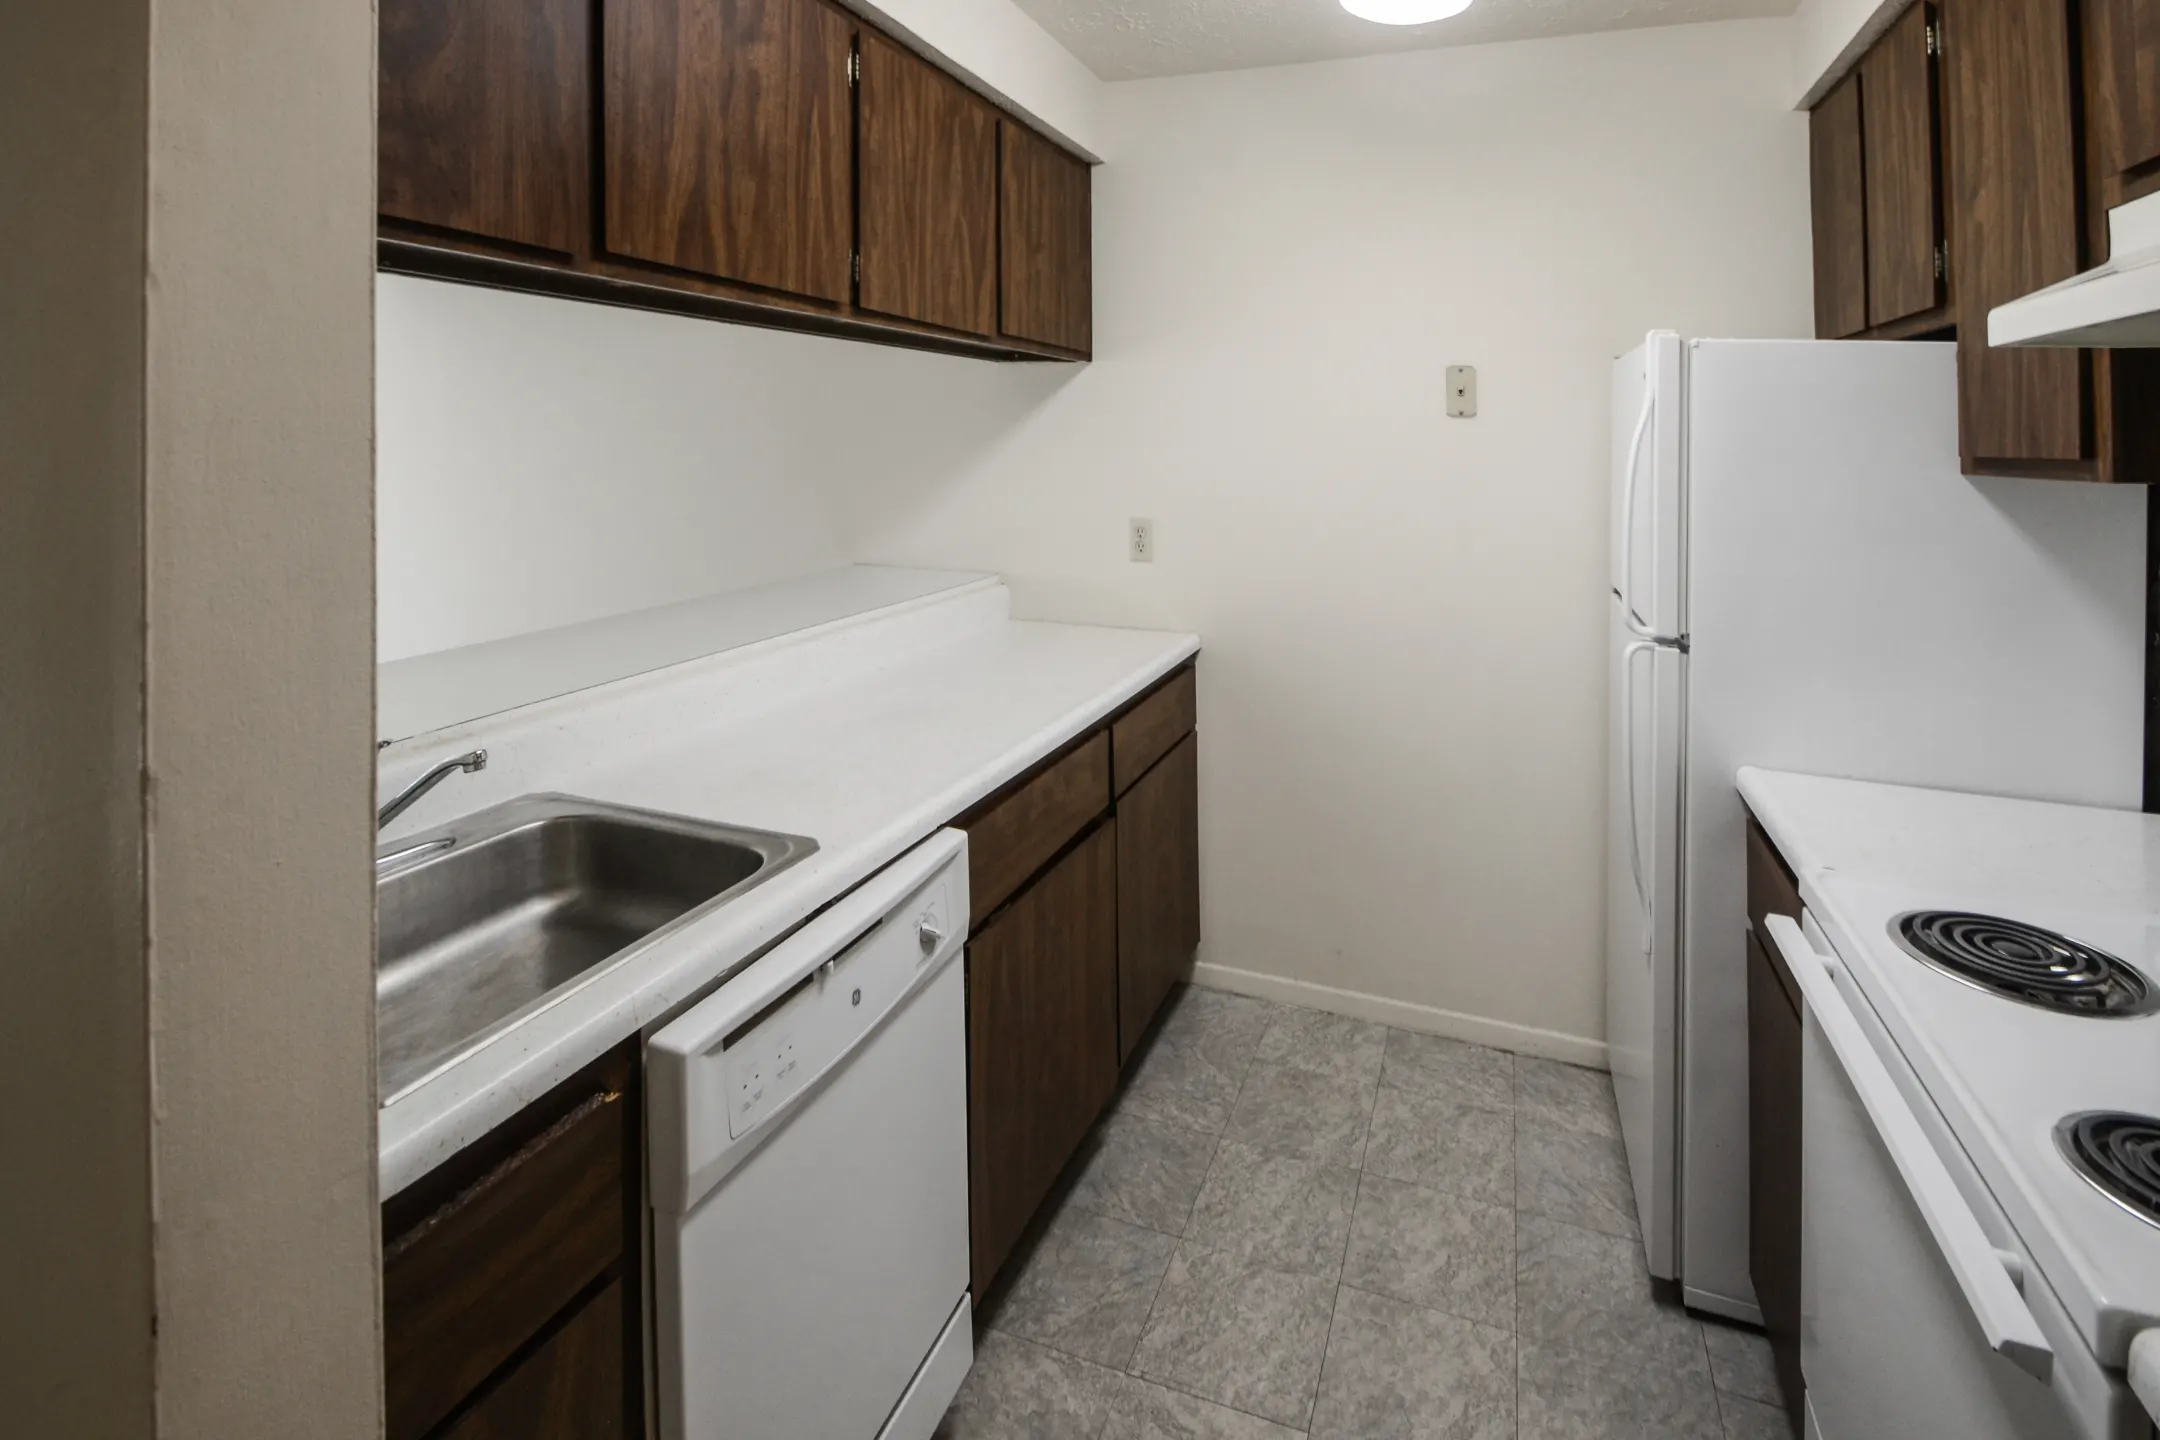 Kitchen - Foxes Lair Apartments - Elyria, OH